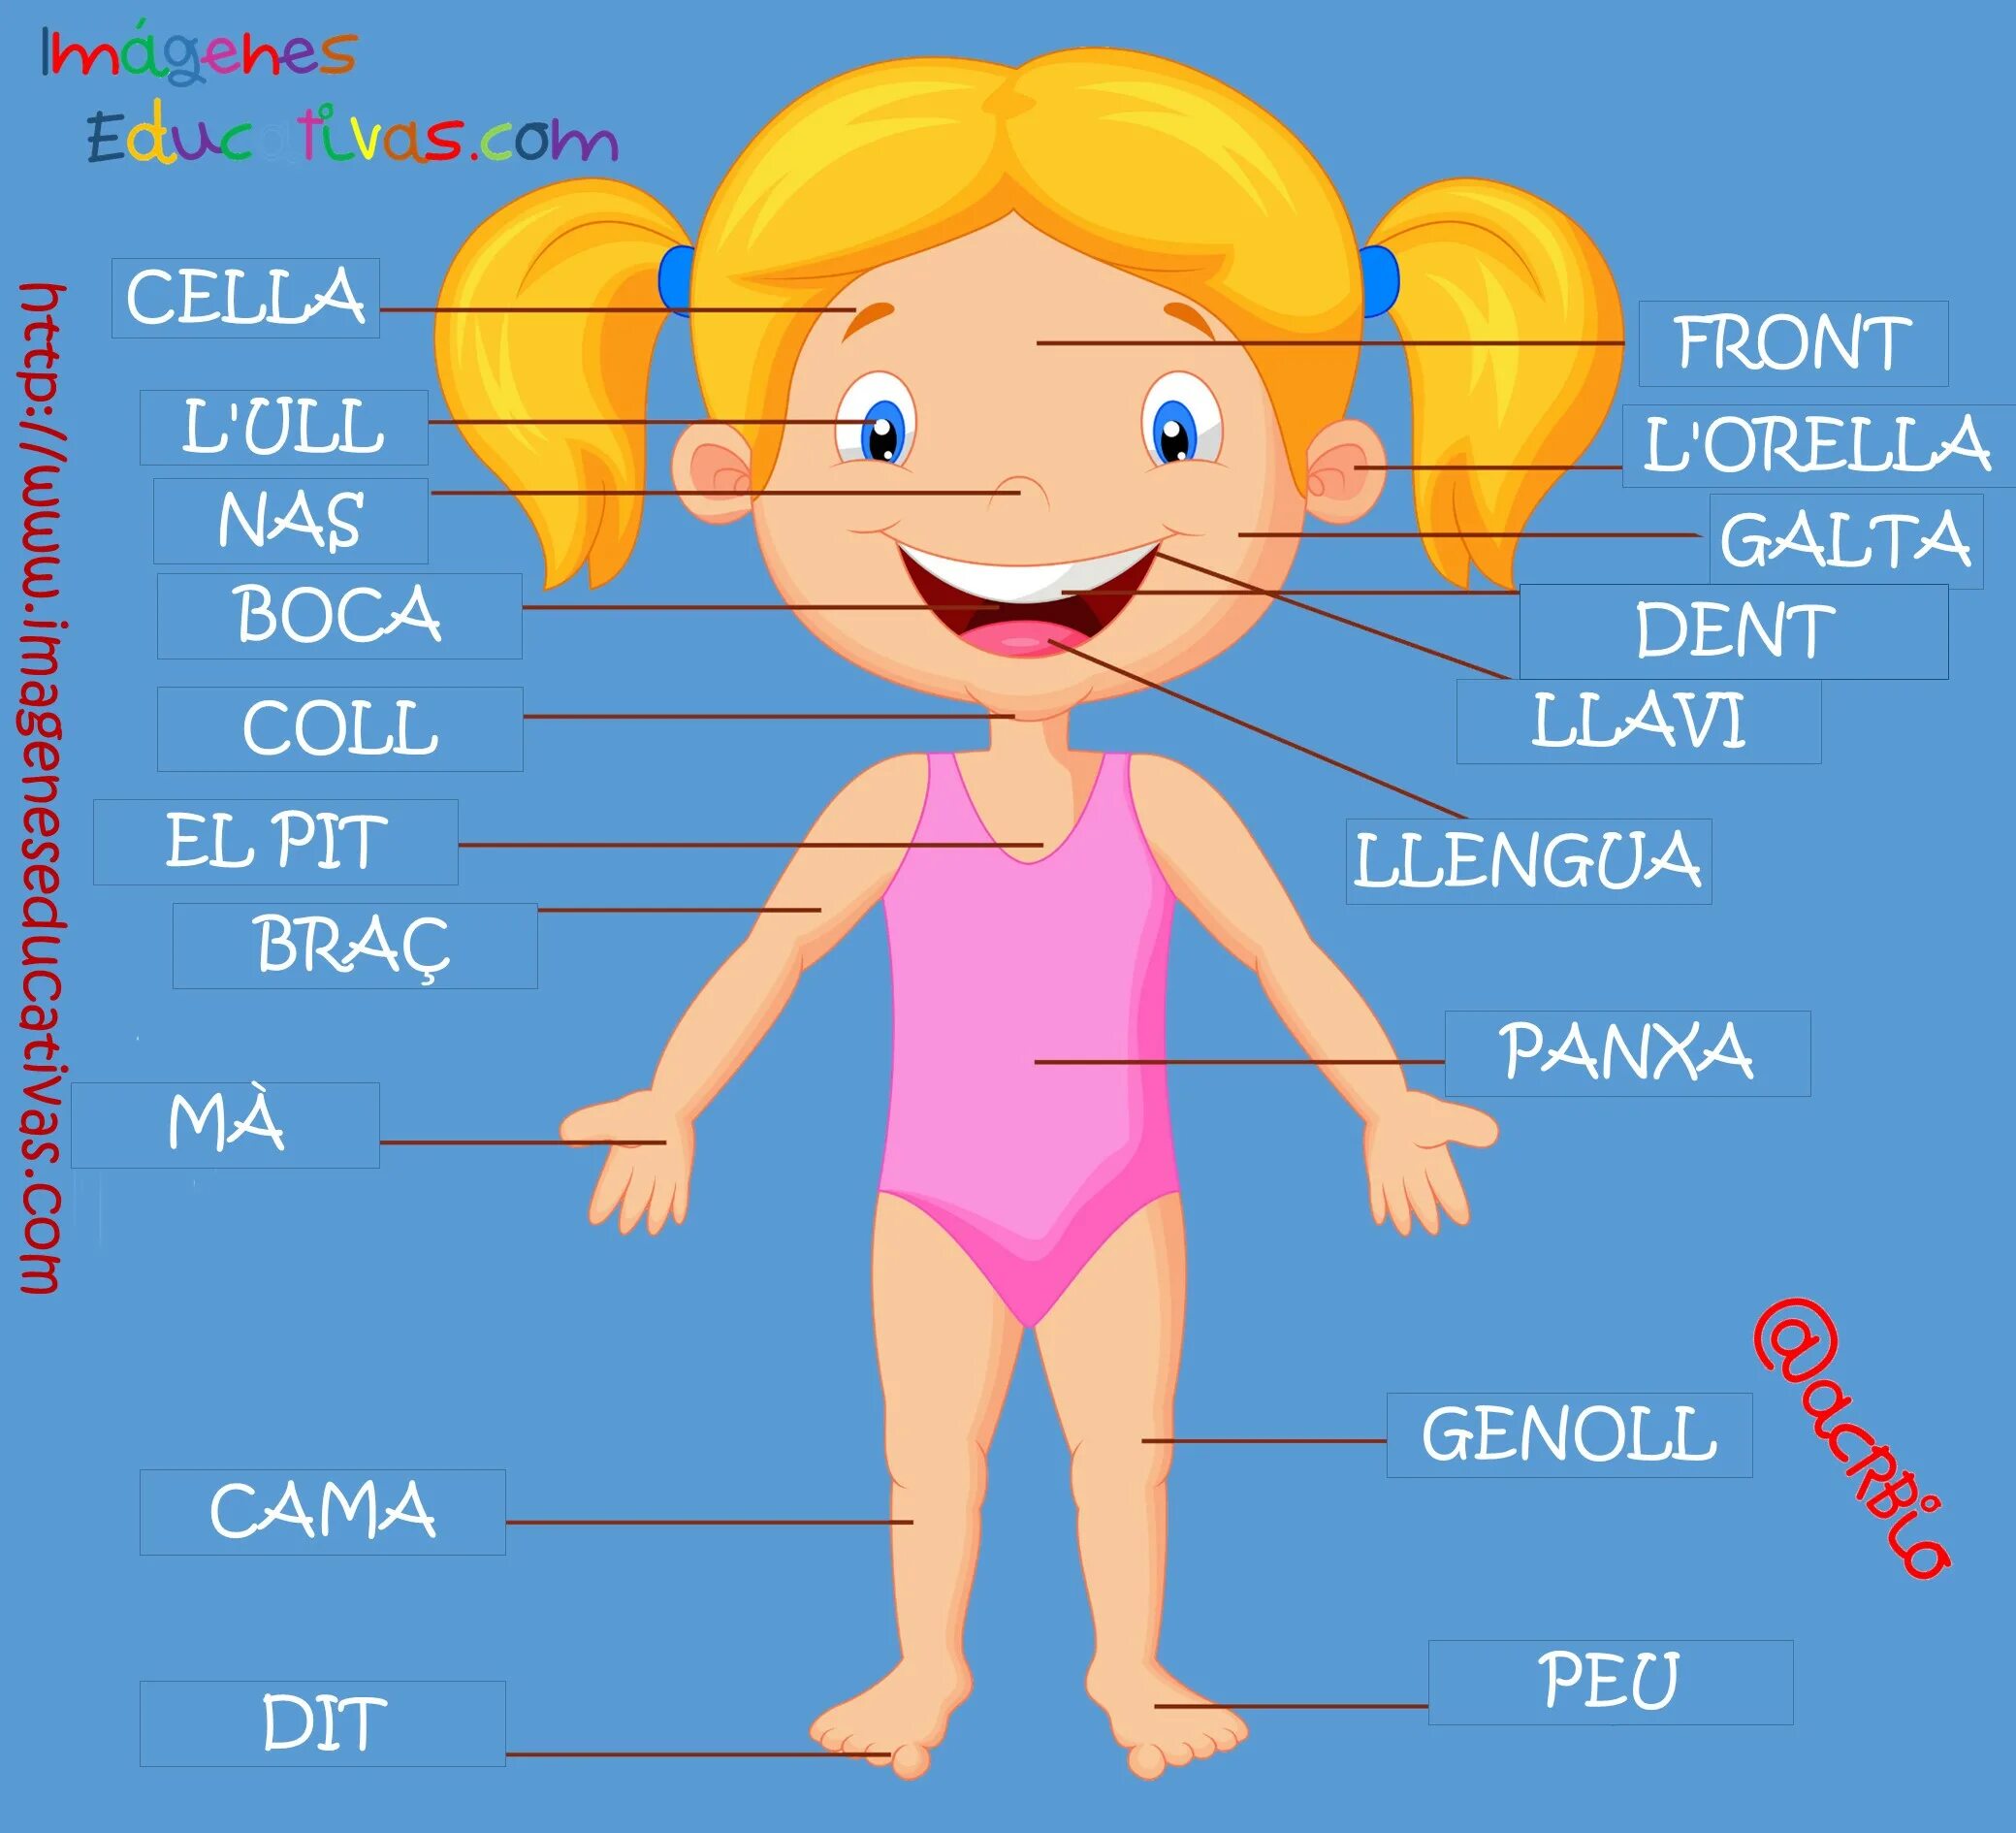 Стс части тела. Части тела человека на испанском. Части тела на испанском для детей. Названия частей тела на испанском. Тело человека на испанском языке.